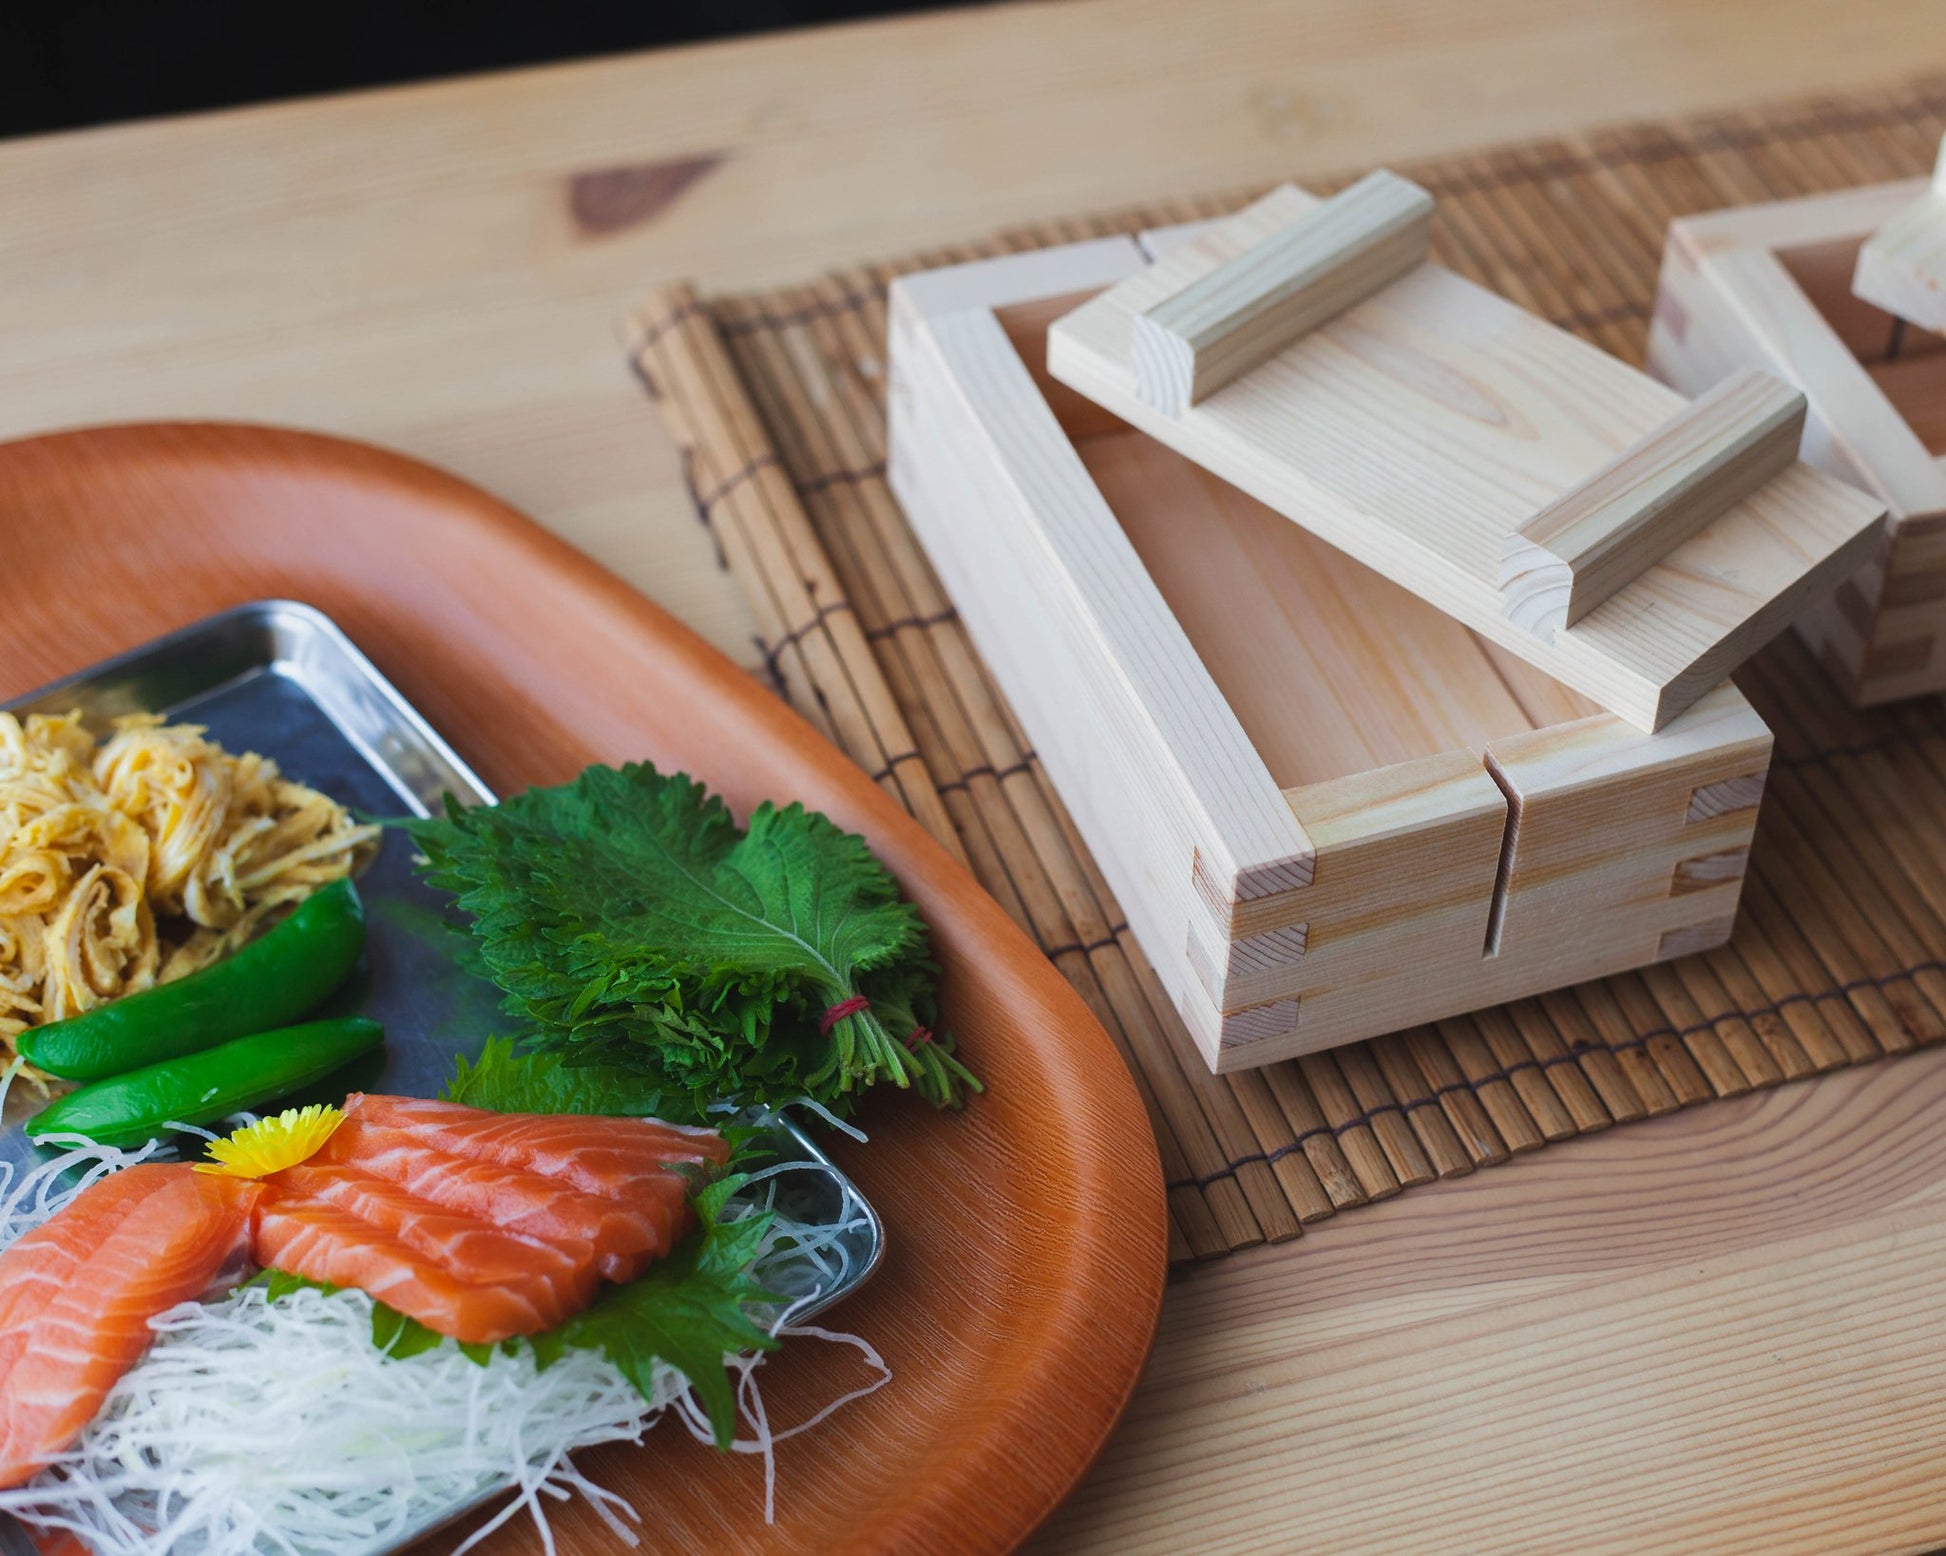 Sushi Making Kit- Complete Sushi Making Kit for Beginners & Pros